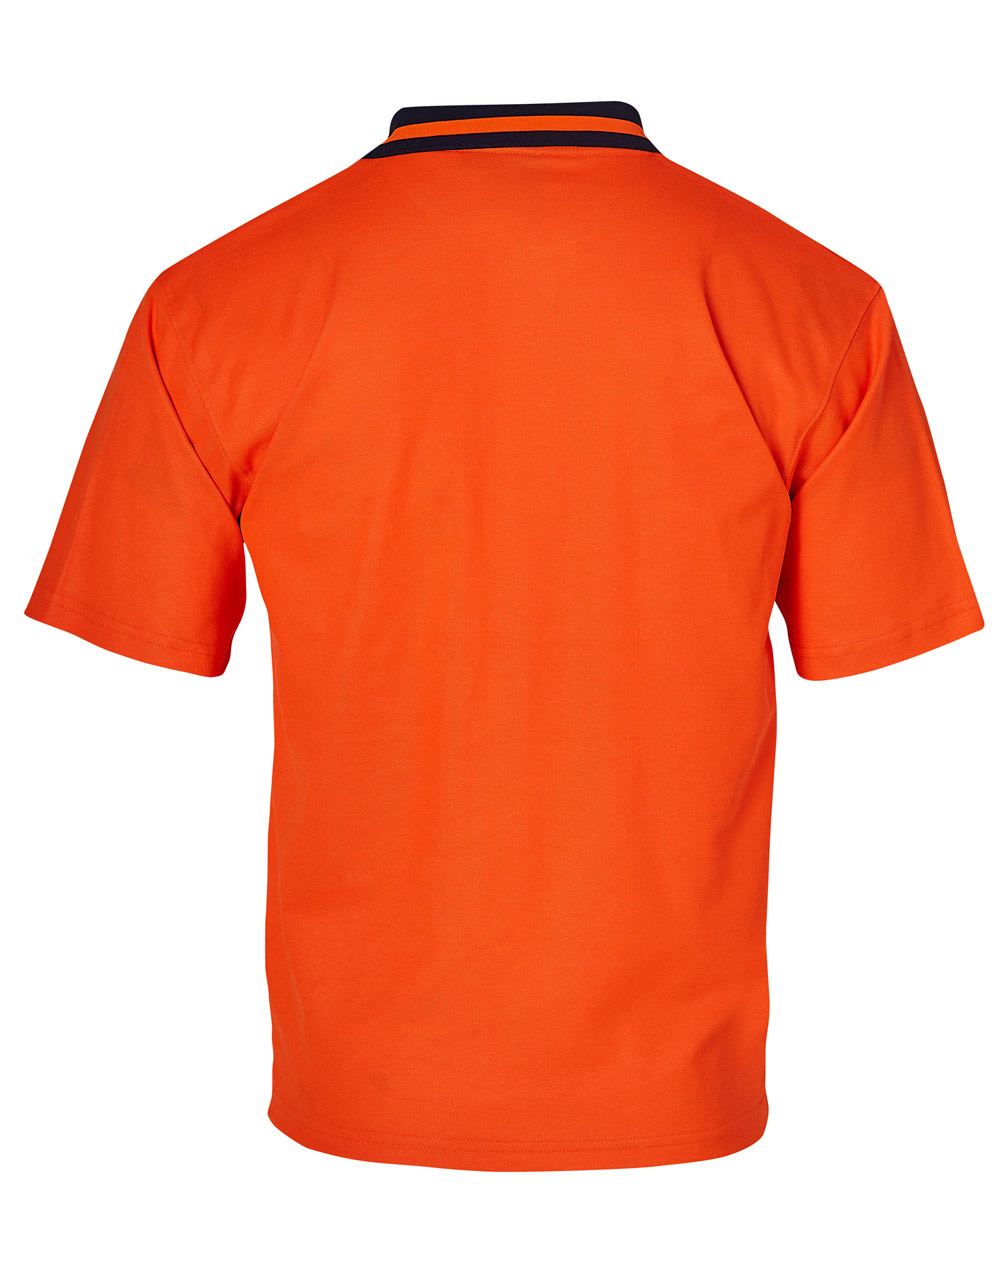 Custom (Fluoro Yellow Navy) Safety Short Sleeve Polo Shirts Online Perth Australia